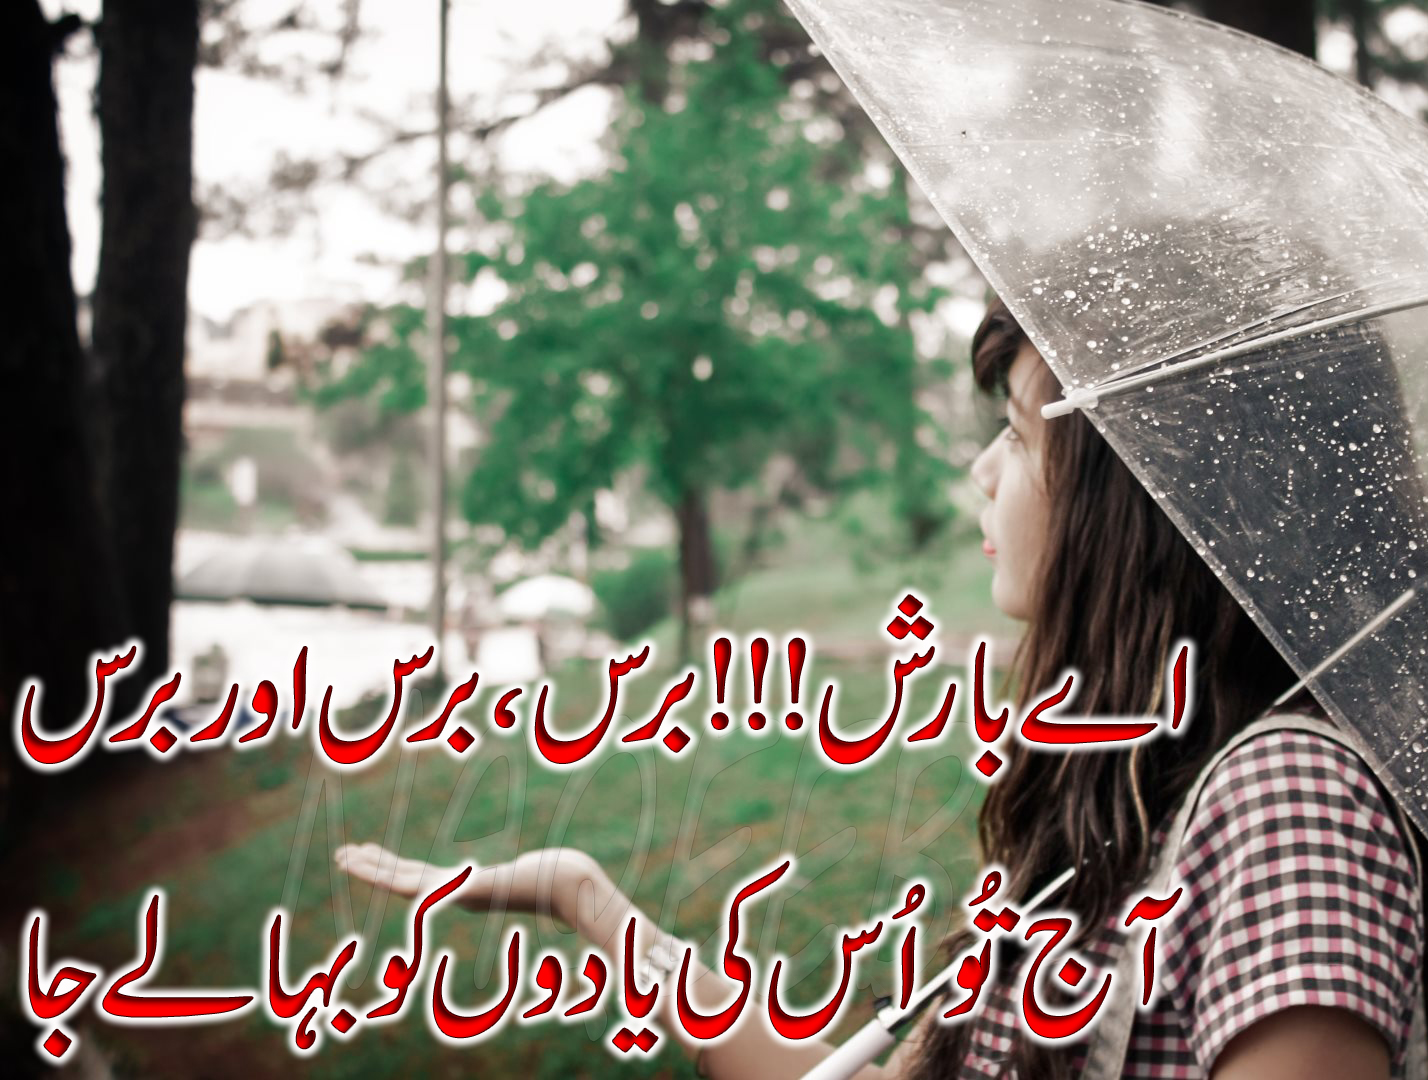 Barish qoyi. Status about Rain. Women Fashion Urdu Poetry. Sad Poetry. Rain best present